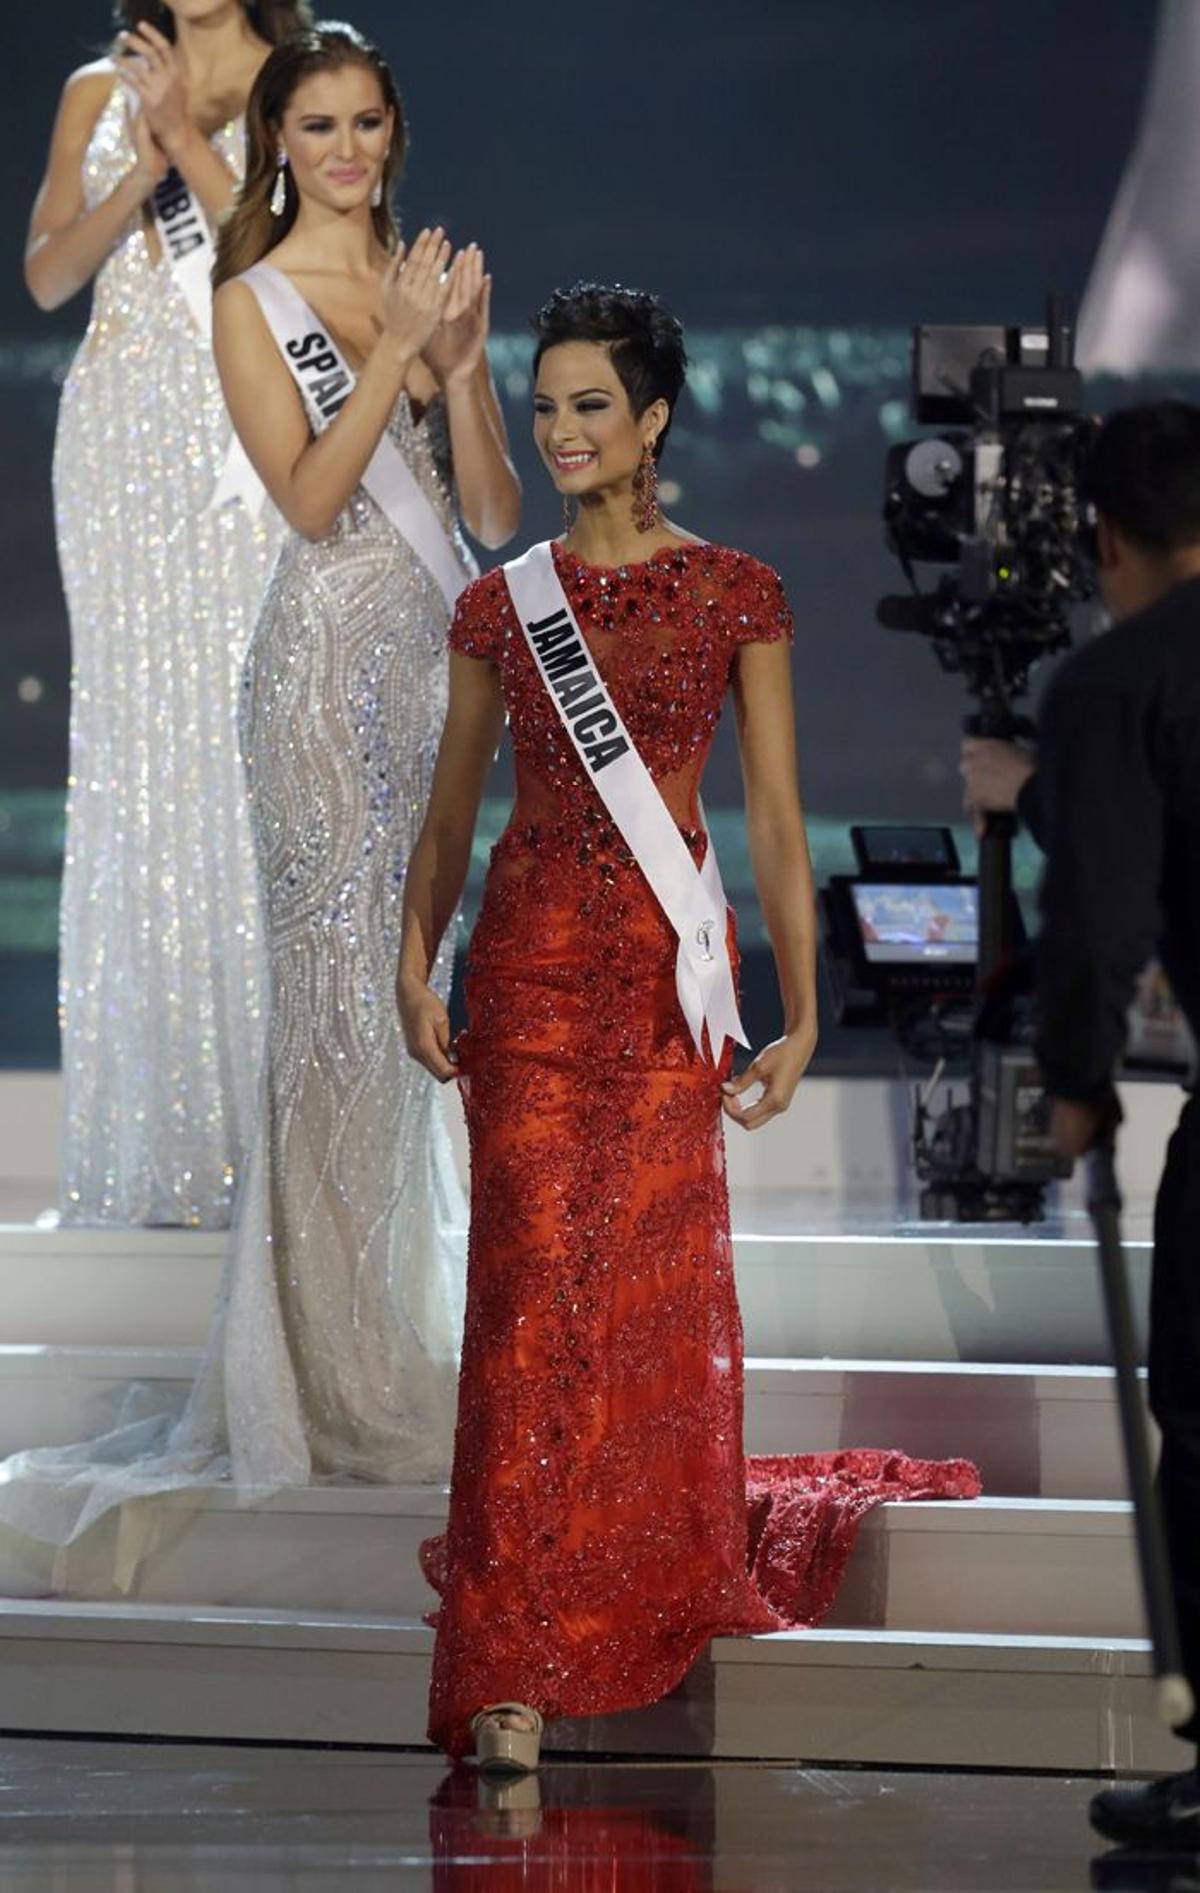 Miss Universo 2015: Desireé Cordero